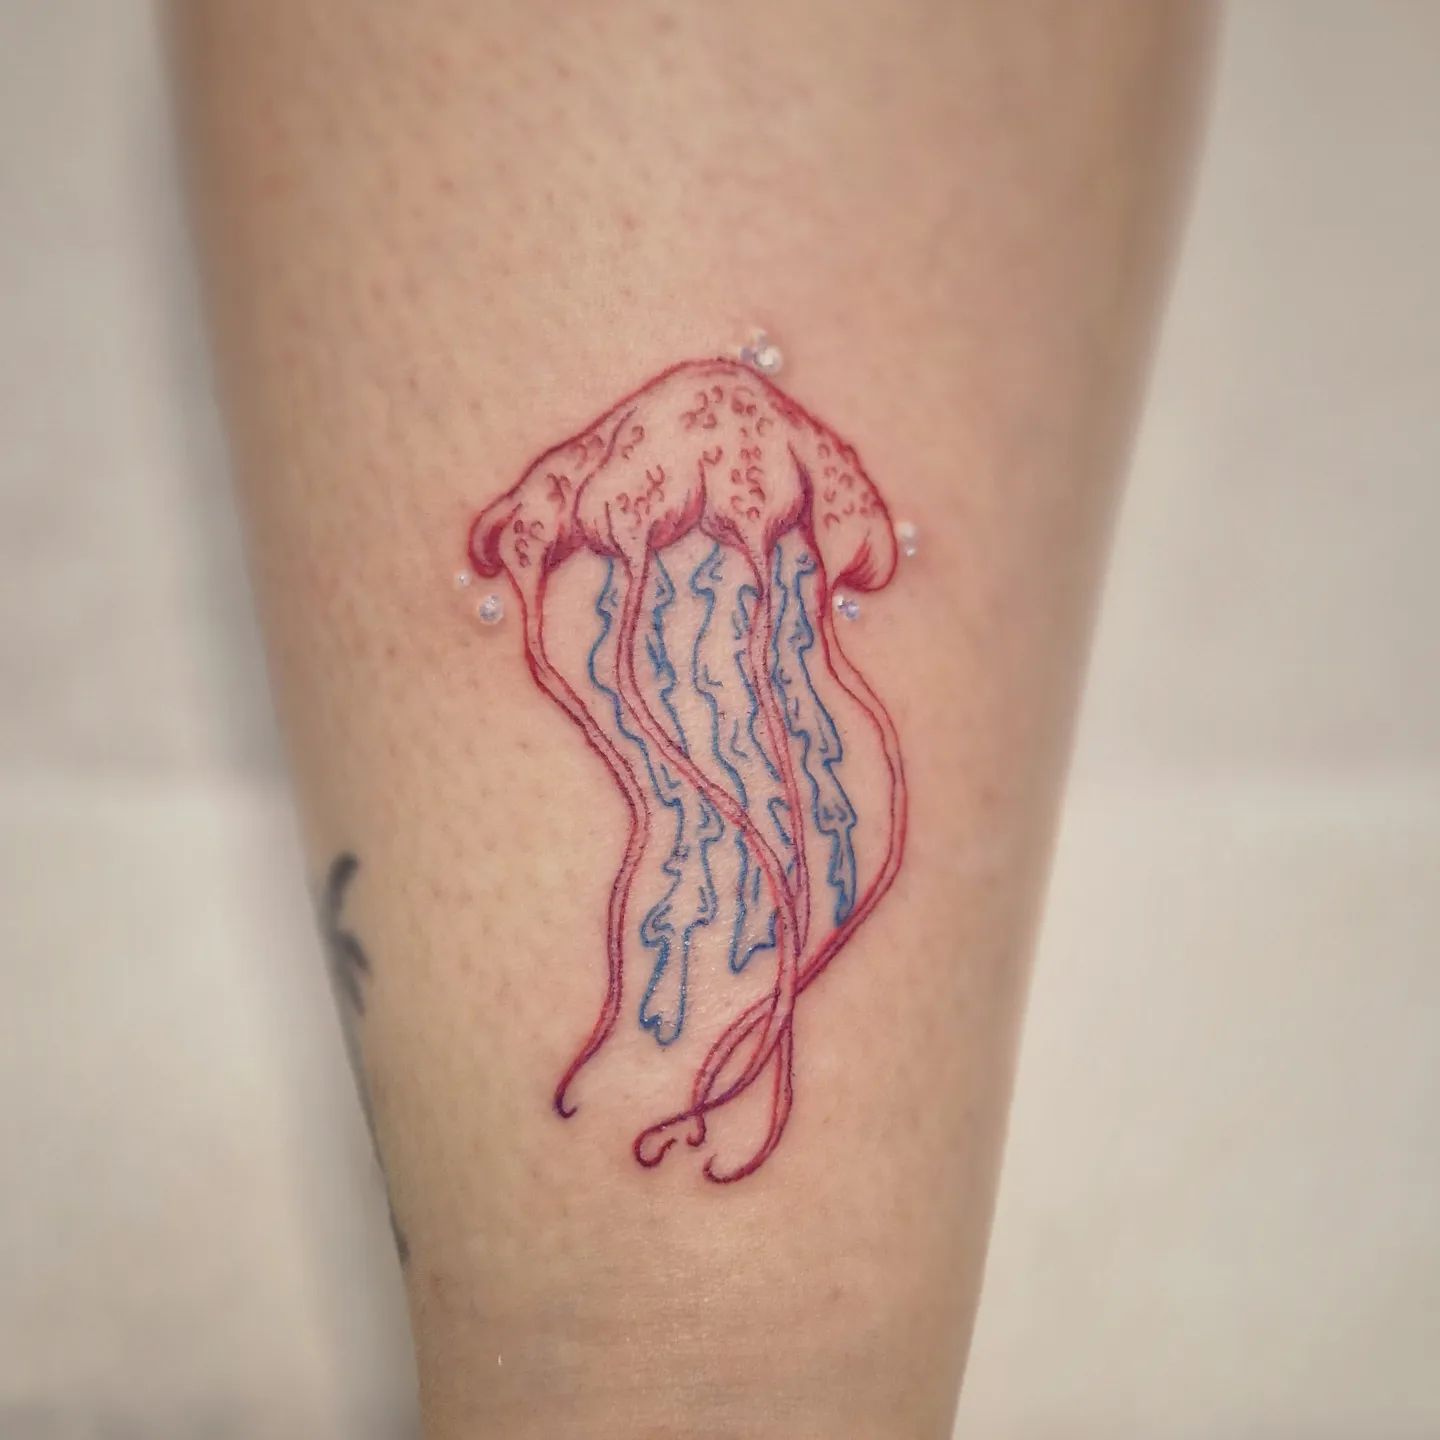 Divertido tatuaje de medusa